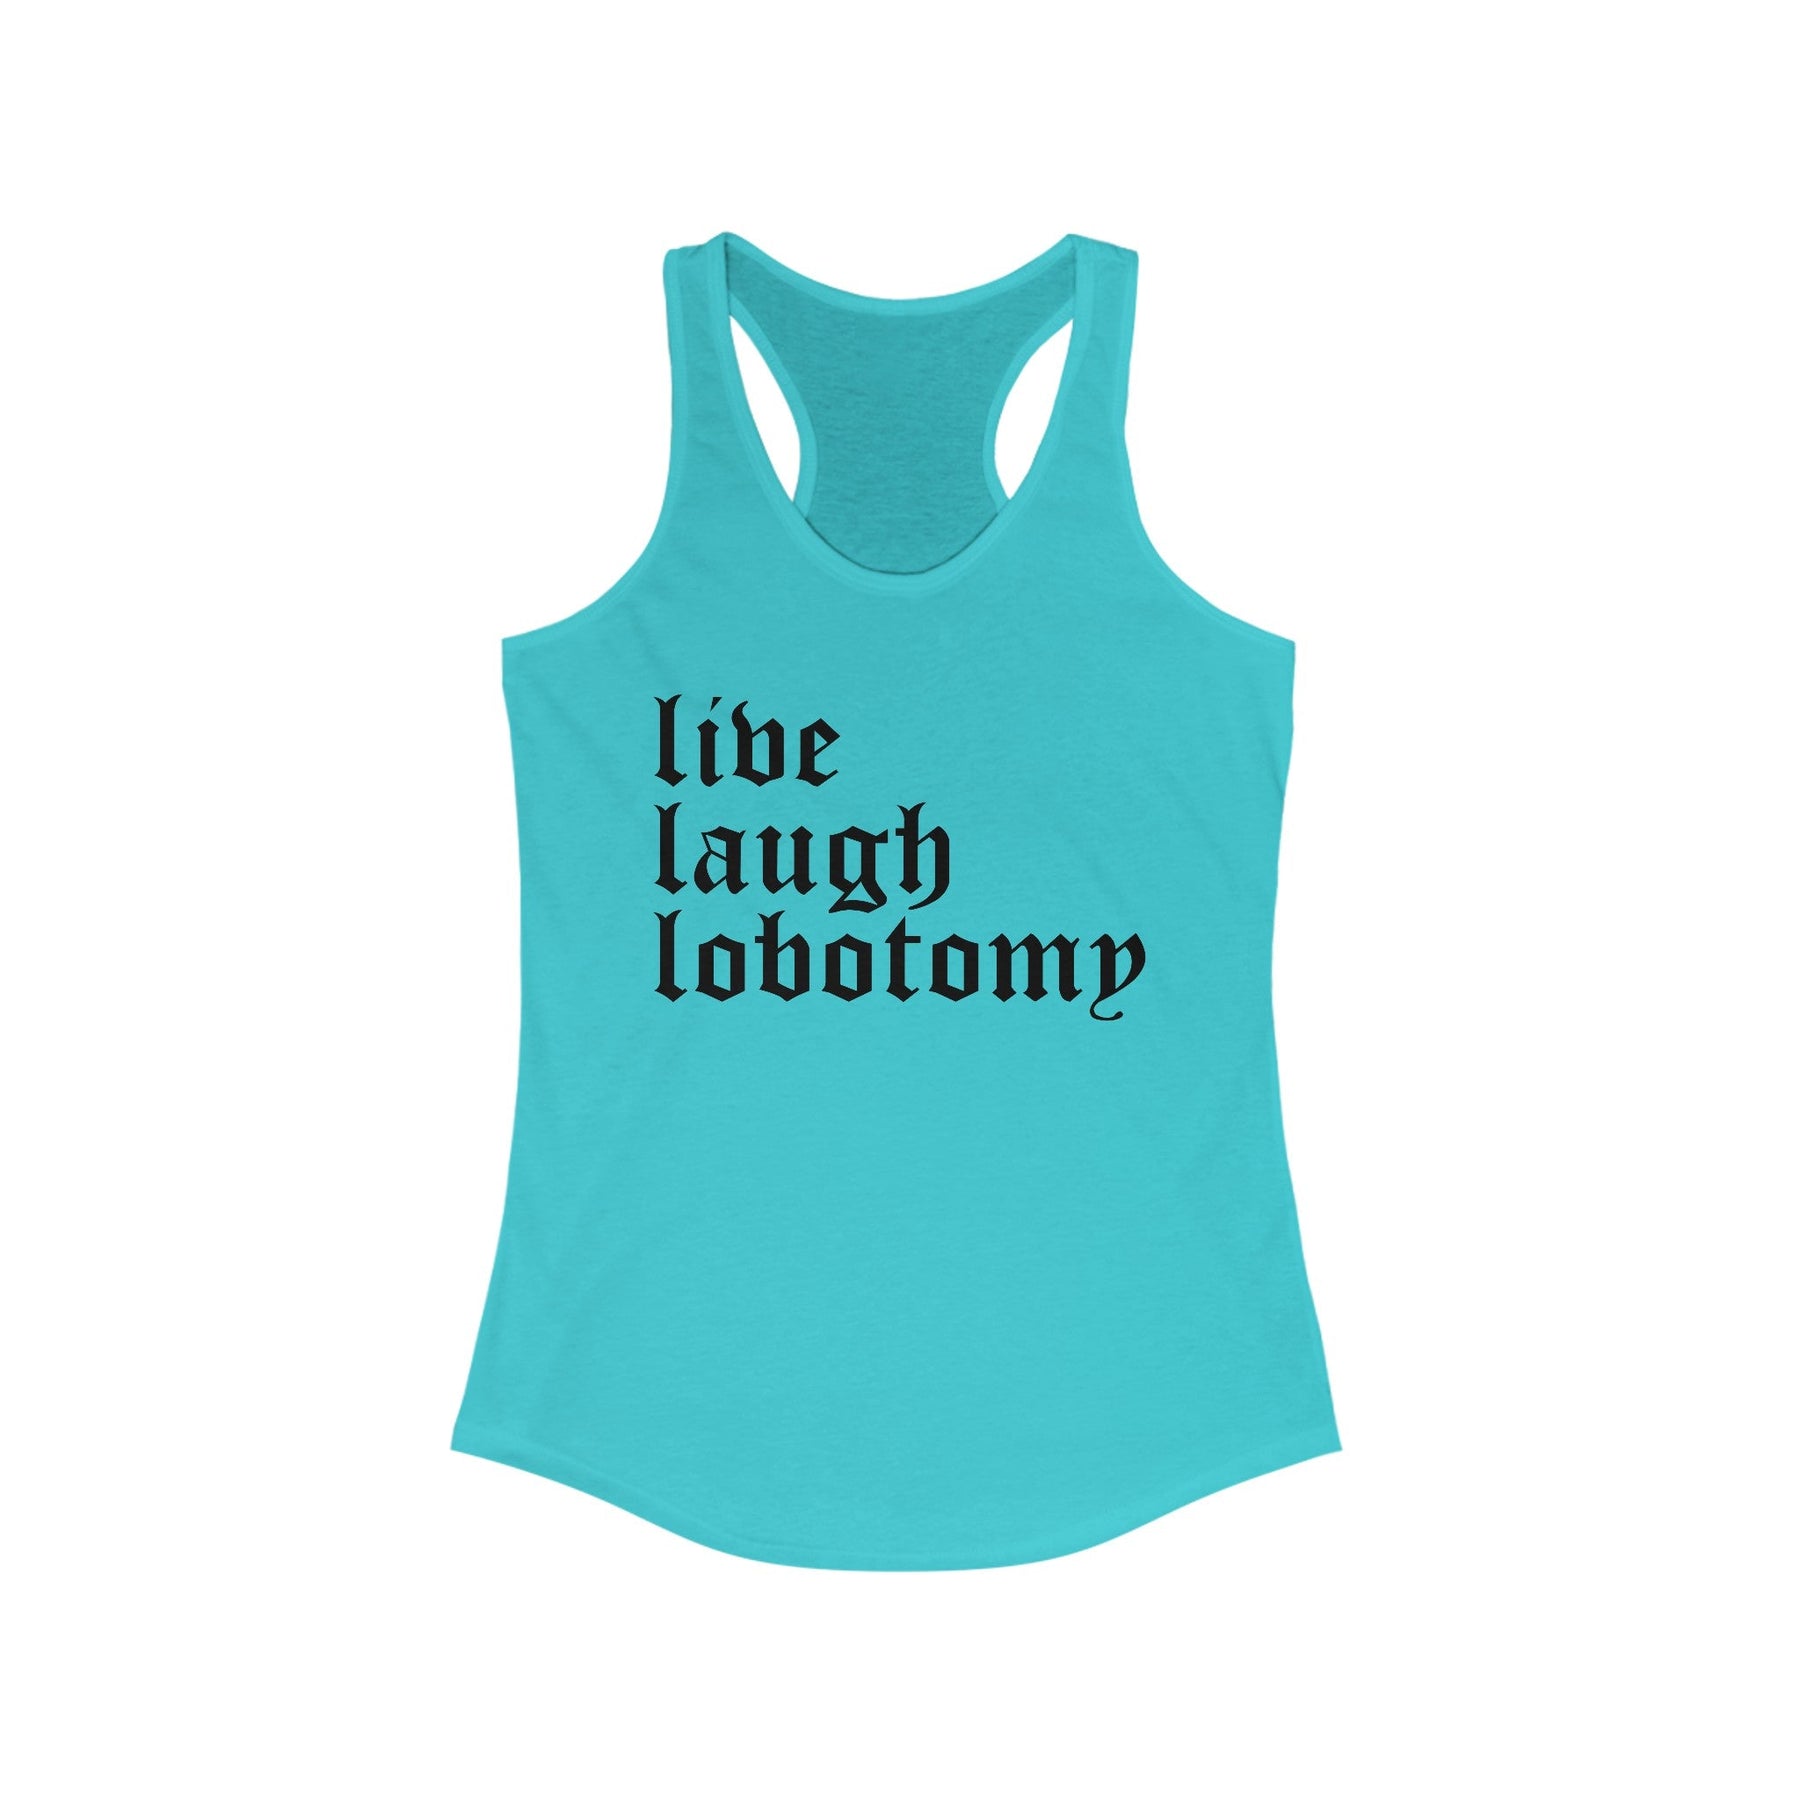 Live Laugh Lobotomy Women's Racerback Tank - Goth Cloth Co.Tank Top30768640131610602820